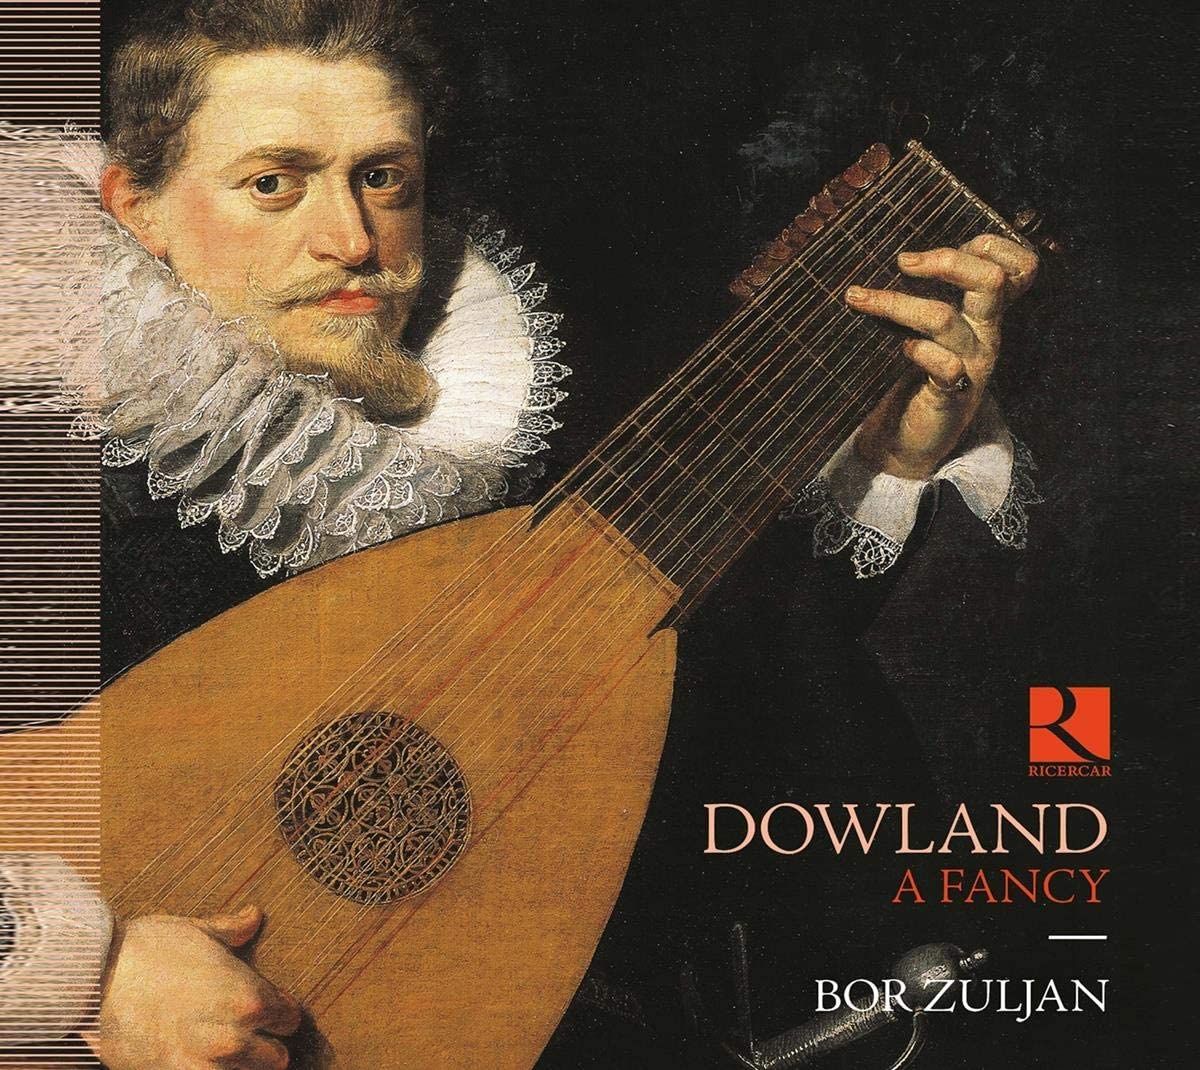 CD cover of Bor Zuljan Dowland lute recital